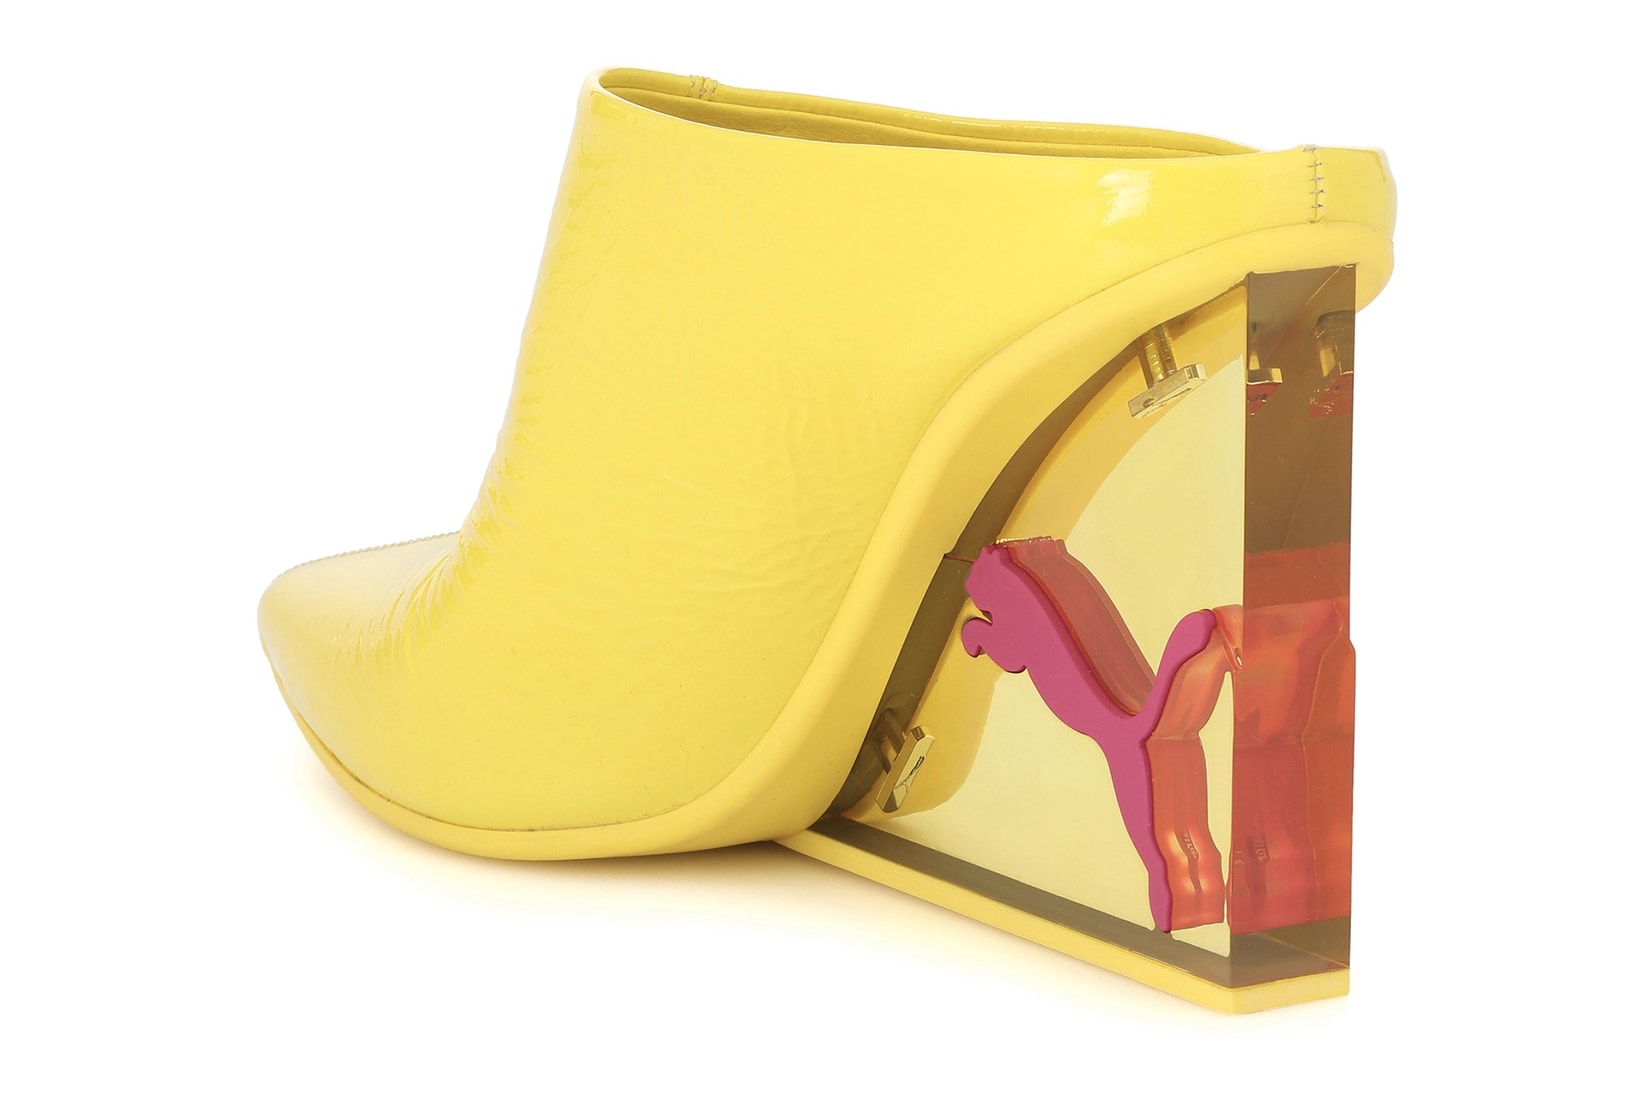 Fenty PUMA Rihanna Yellow Perspex Heel Mules Sandals